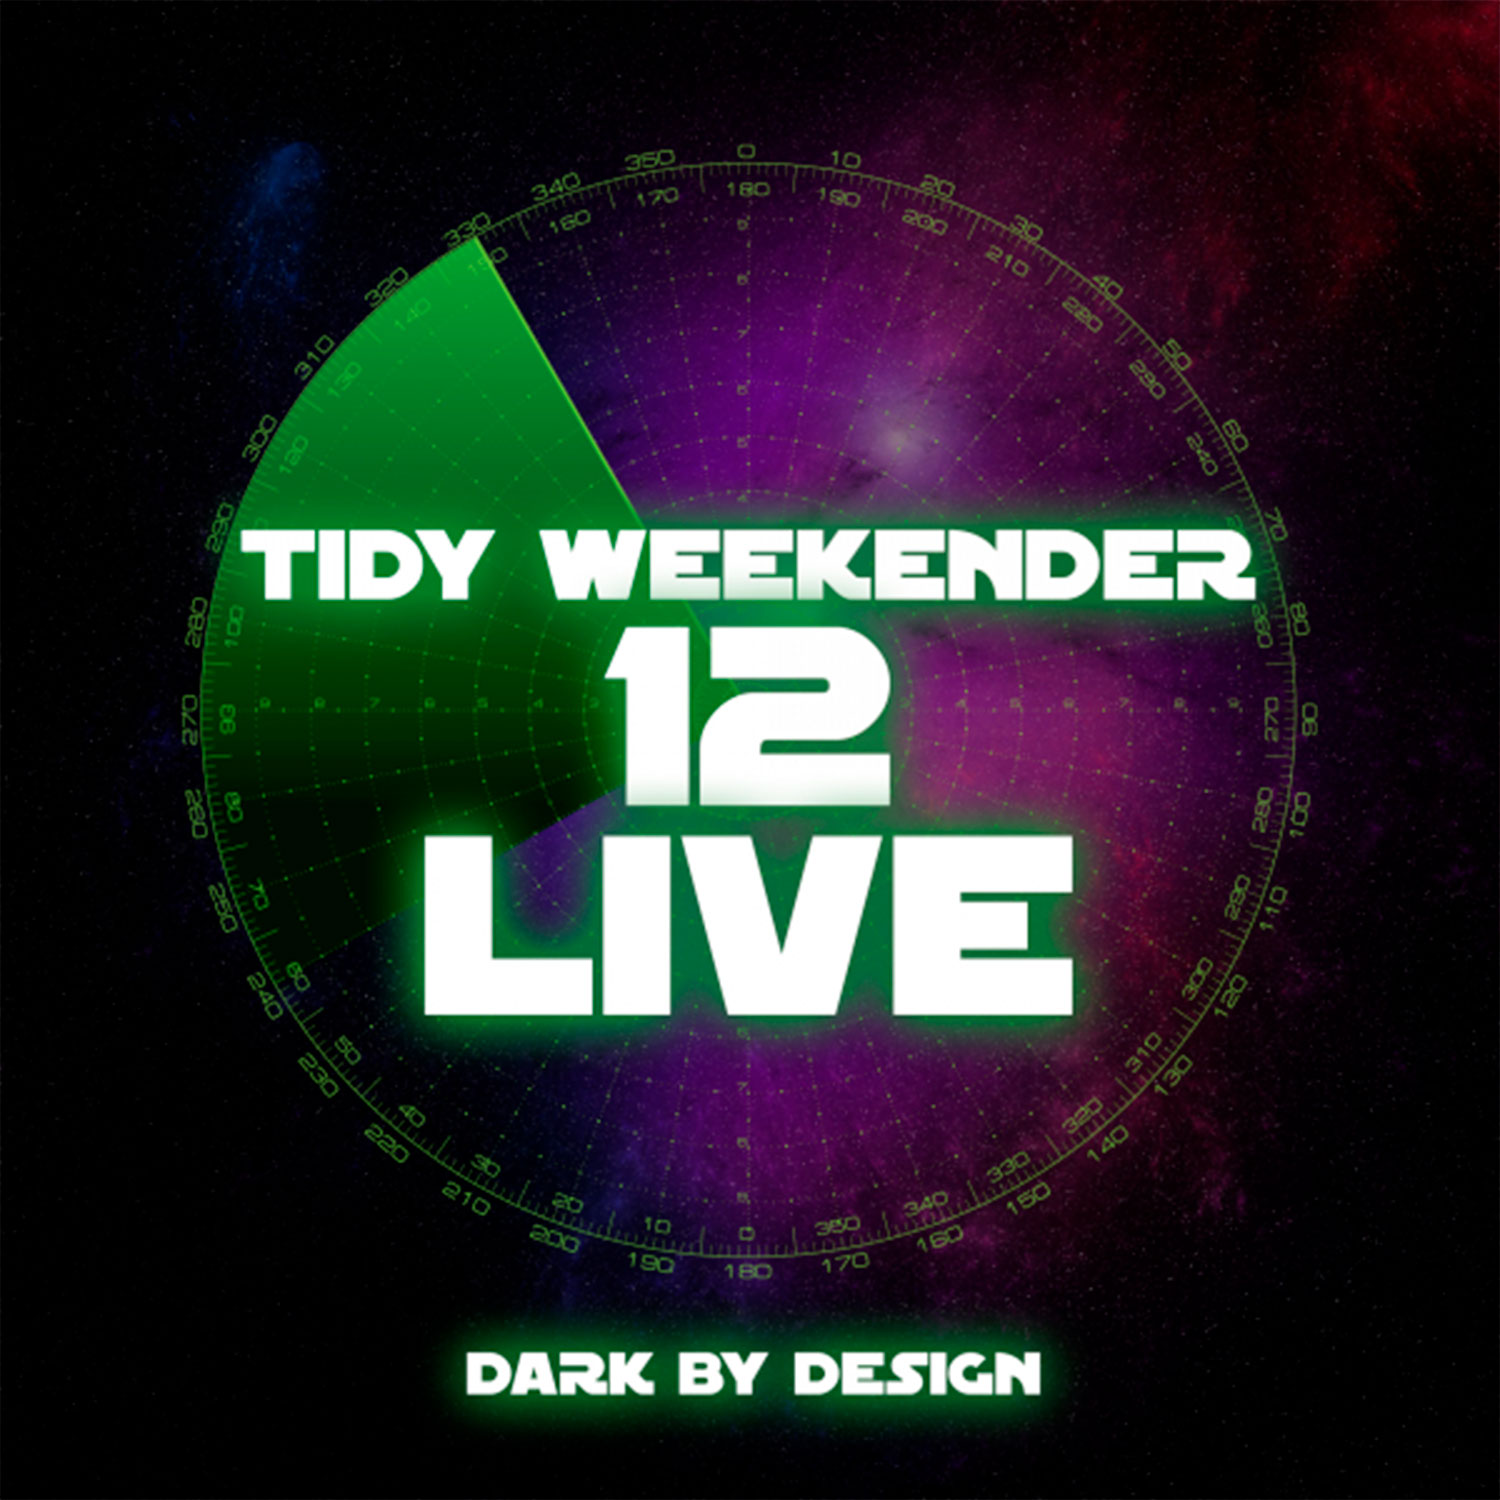 Tidy Weekender 12 Live - Dark by Design